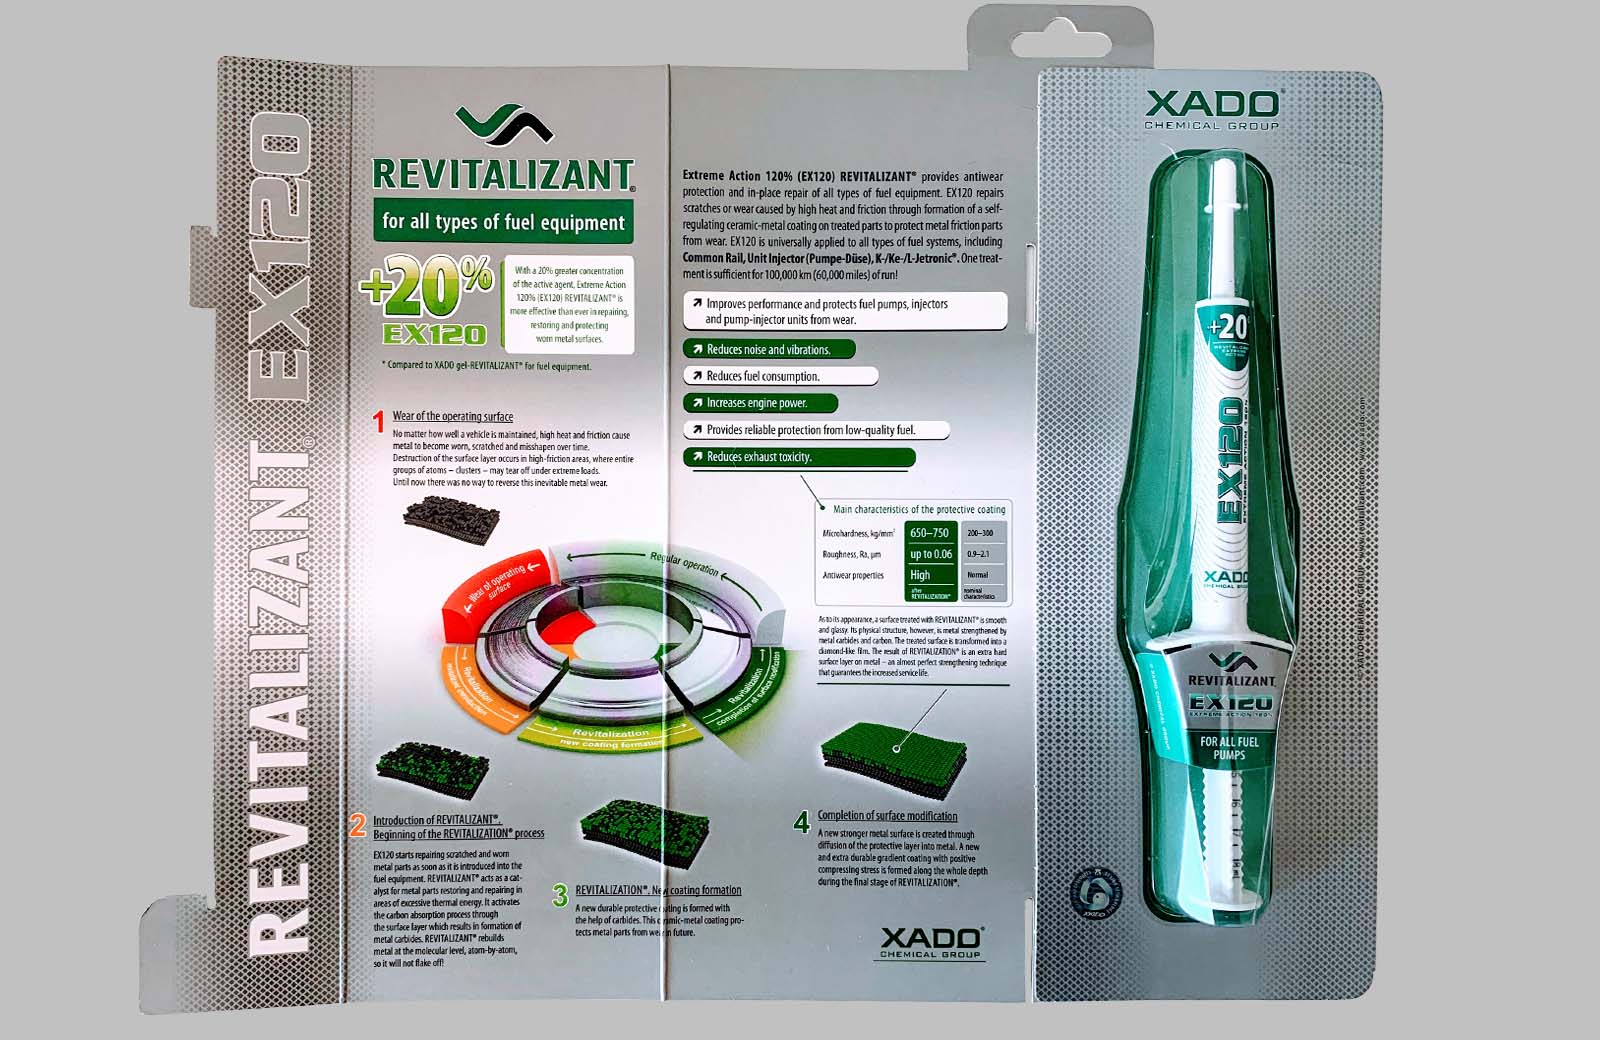 XADO Revitalizant for Diesel High Pressure Fuel Pumps Fuel System Treatment